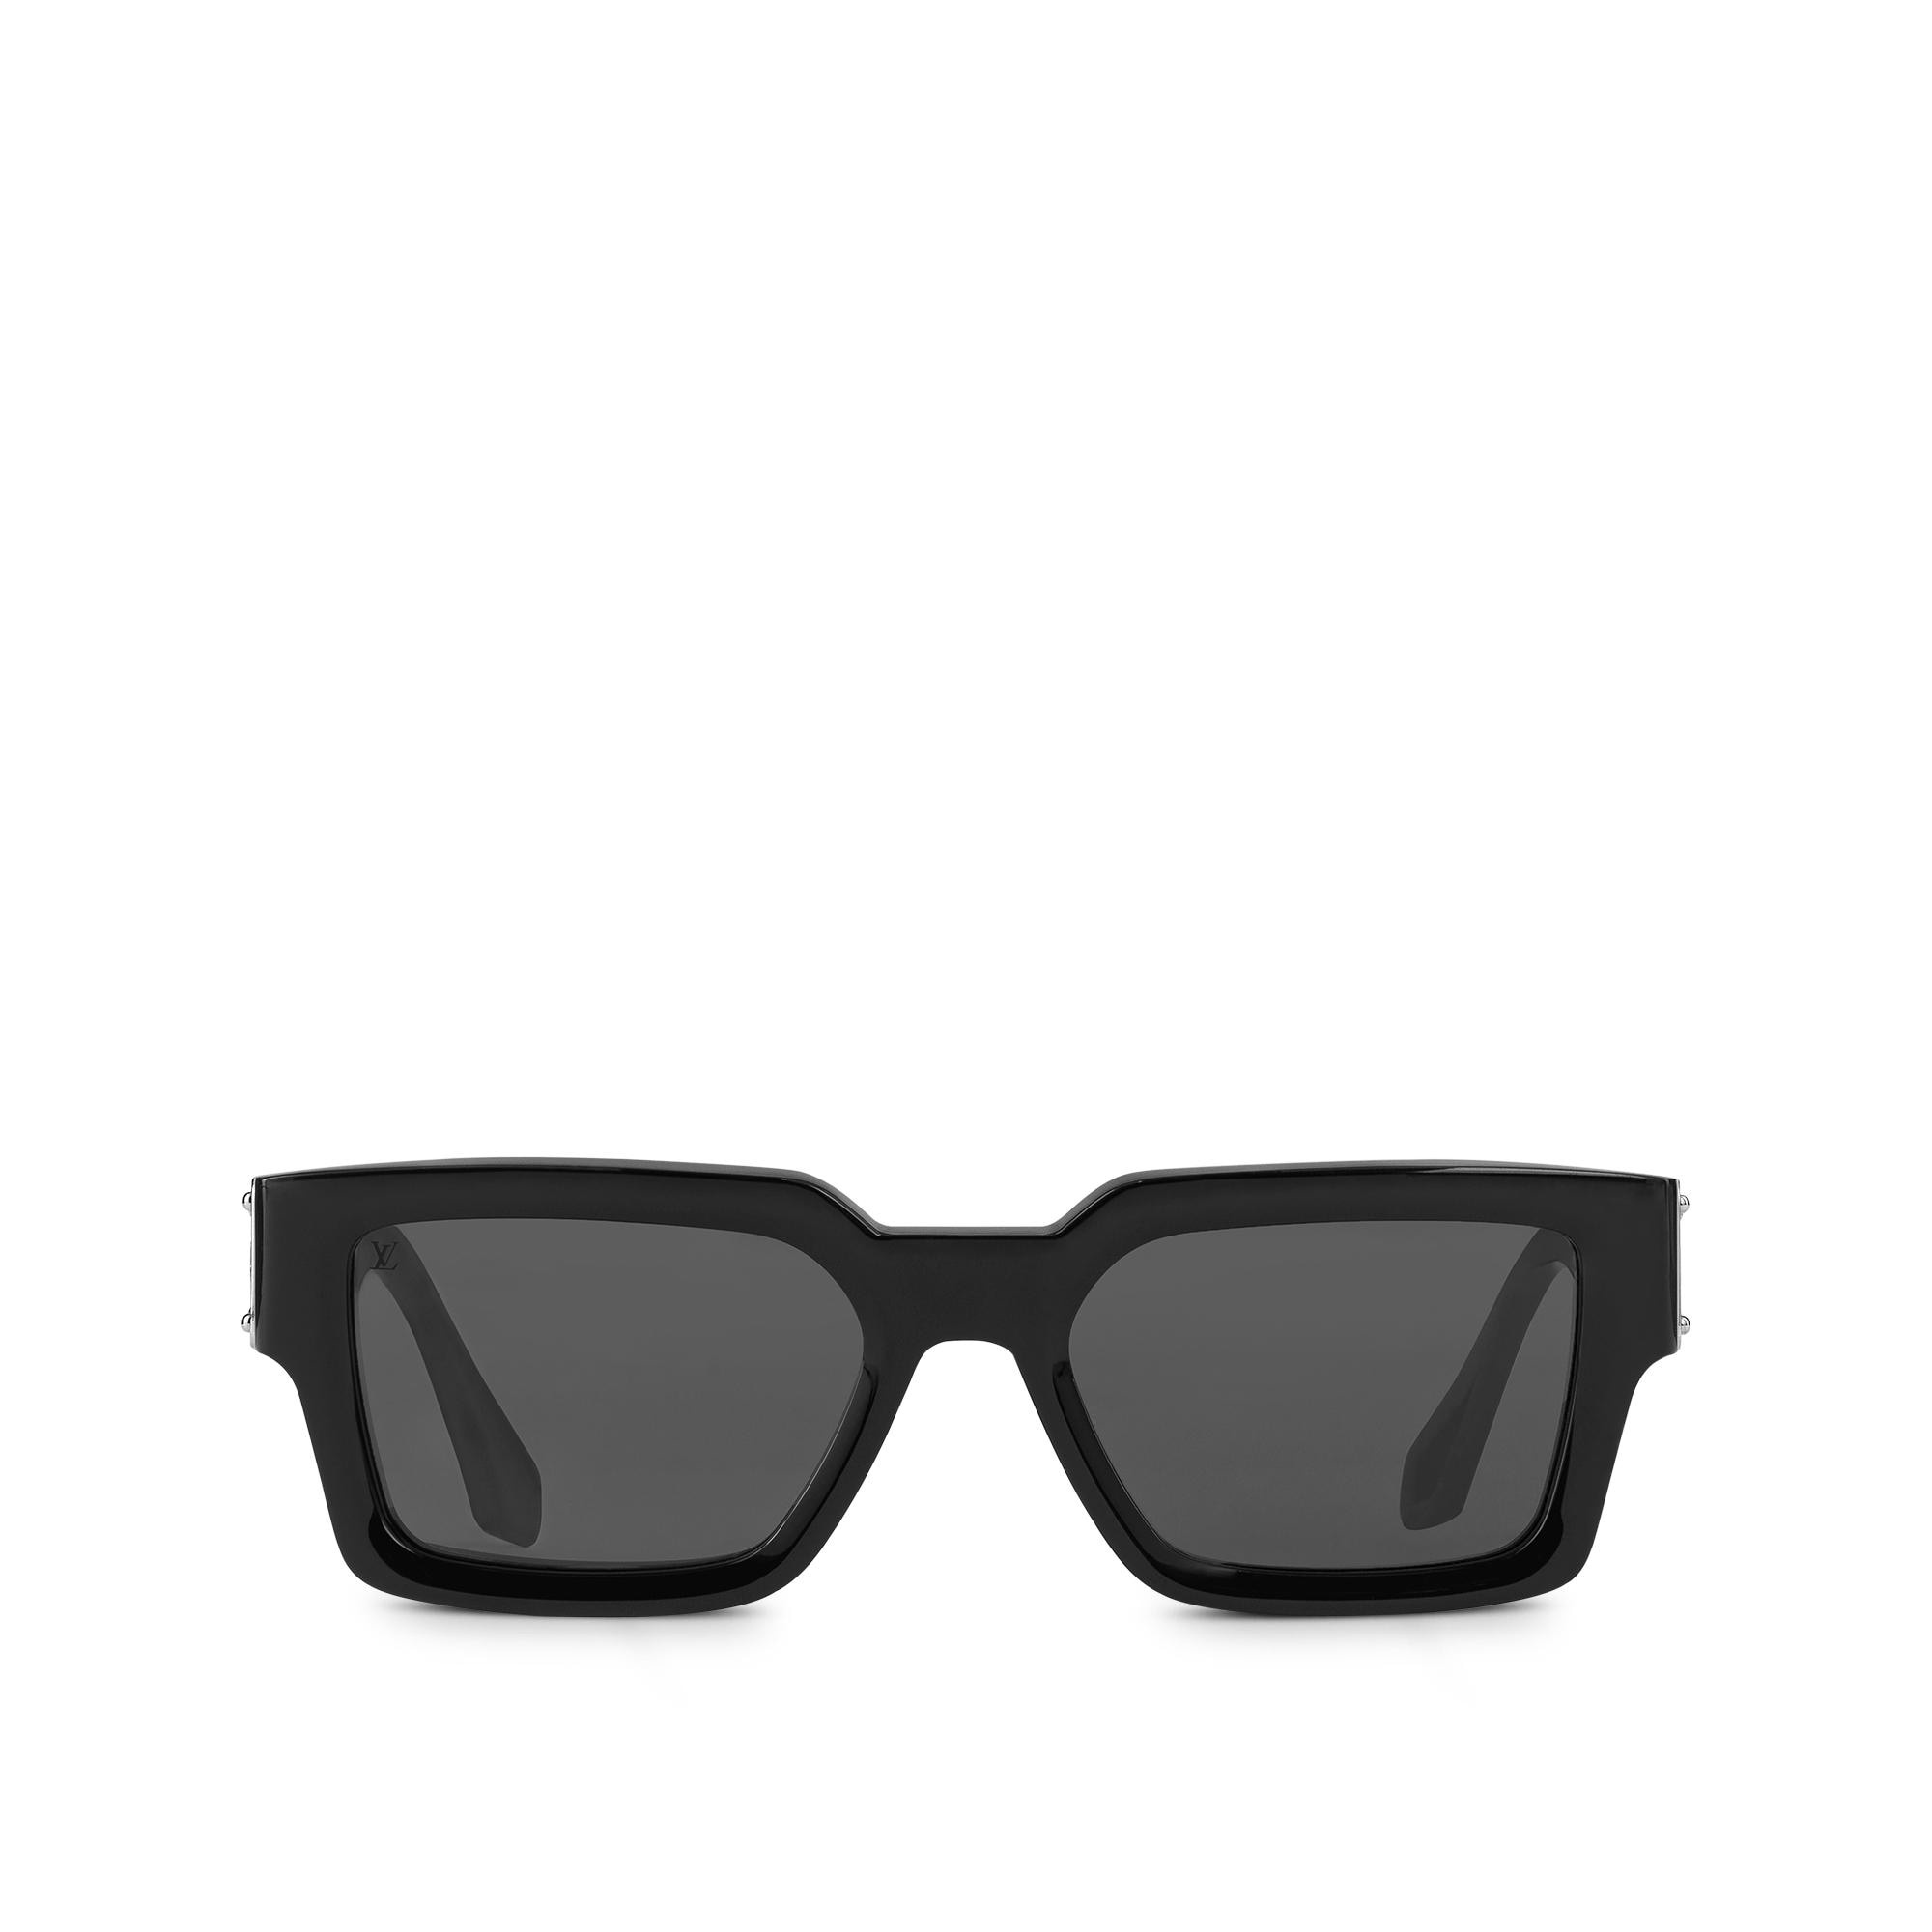 LV Match Sunglasses - 5